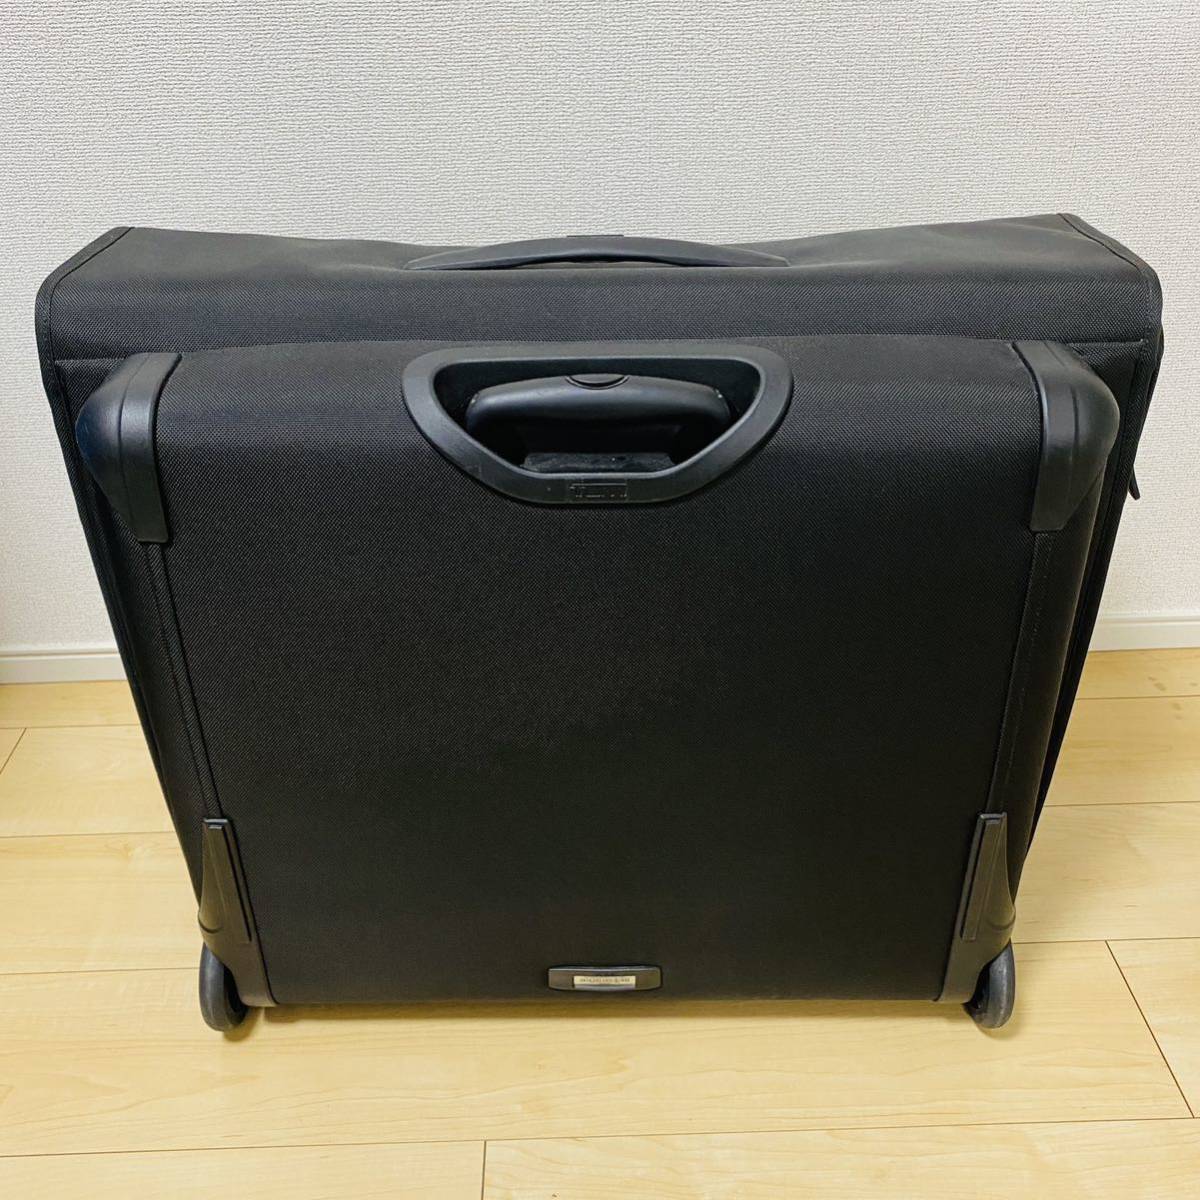 TUMI/ Tumi / carry bag / garment bag / suitcase / business / business trip / travel / black /